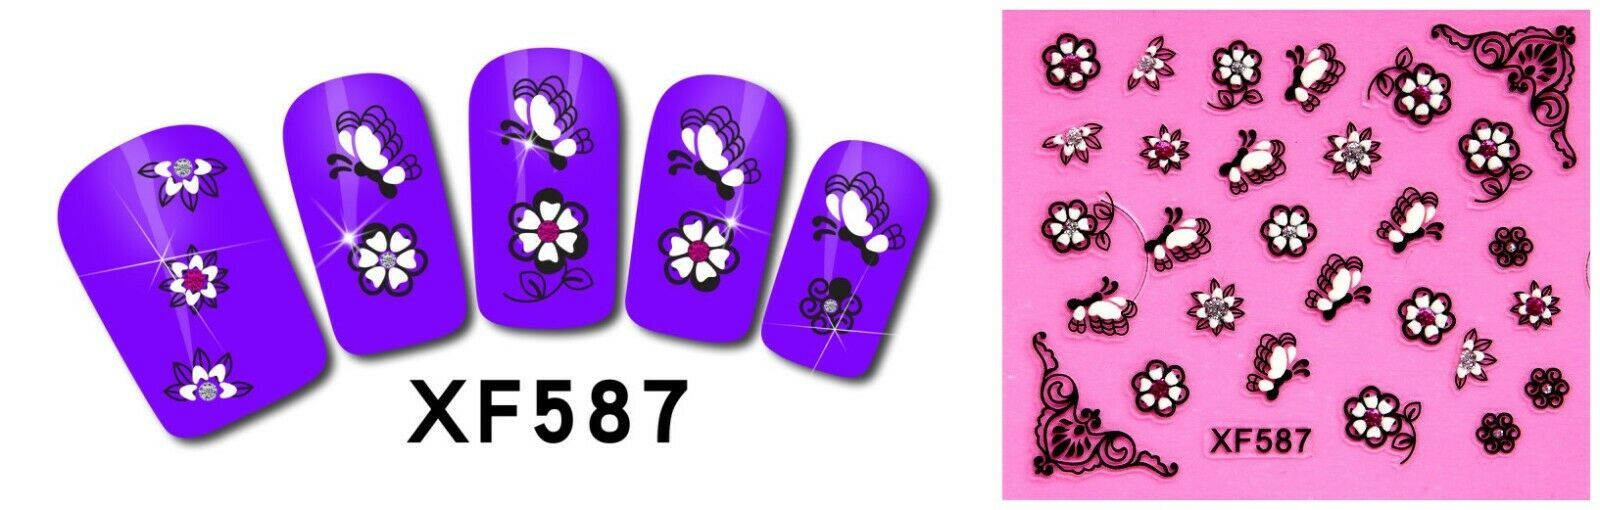 Nail Art 3D Decal Stickers Beautiful Butterflies Flowers Pink Rhinestones XF587